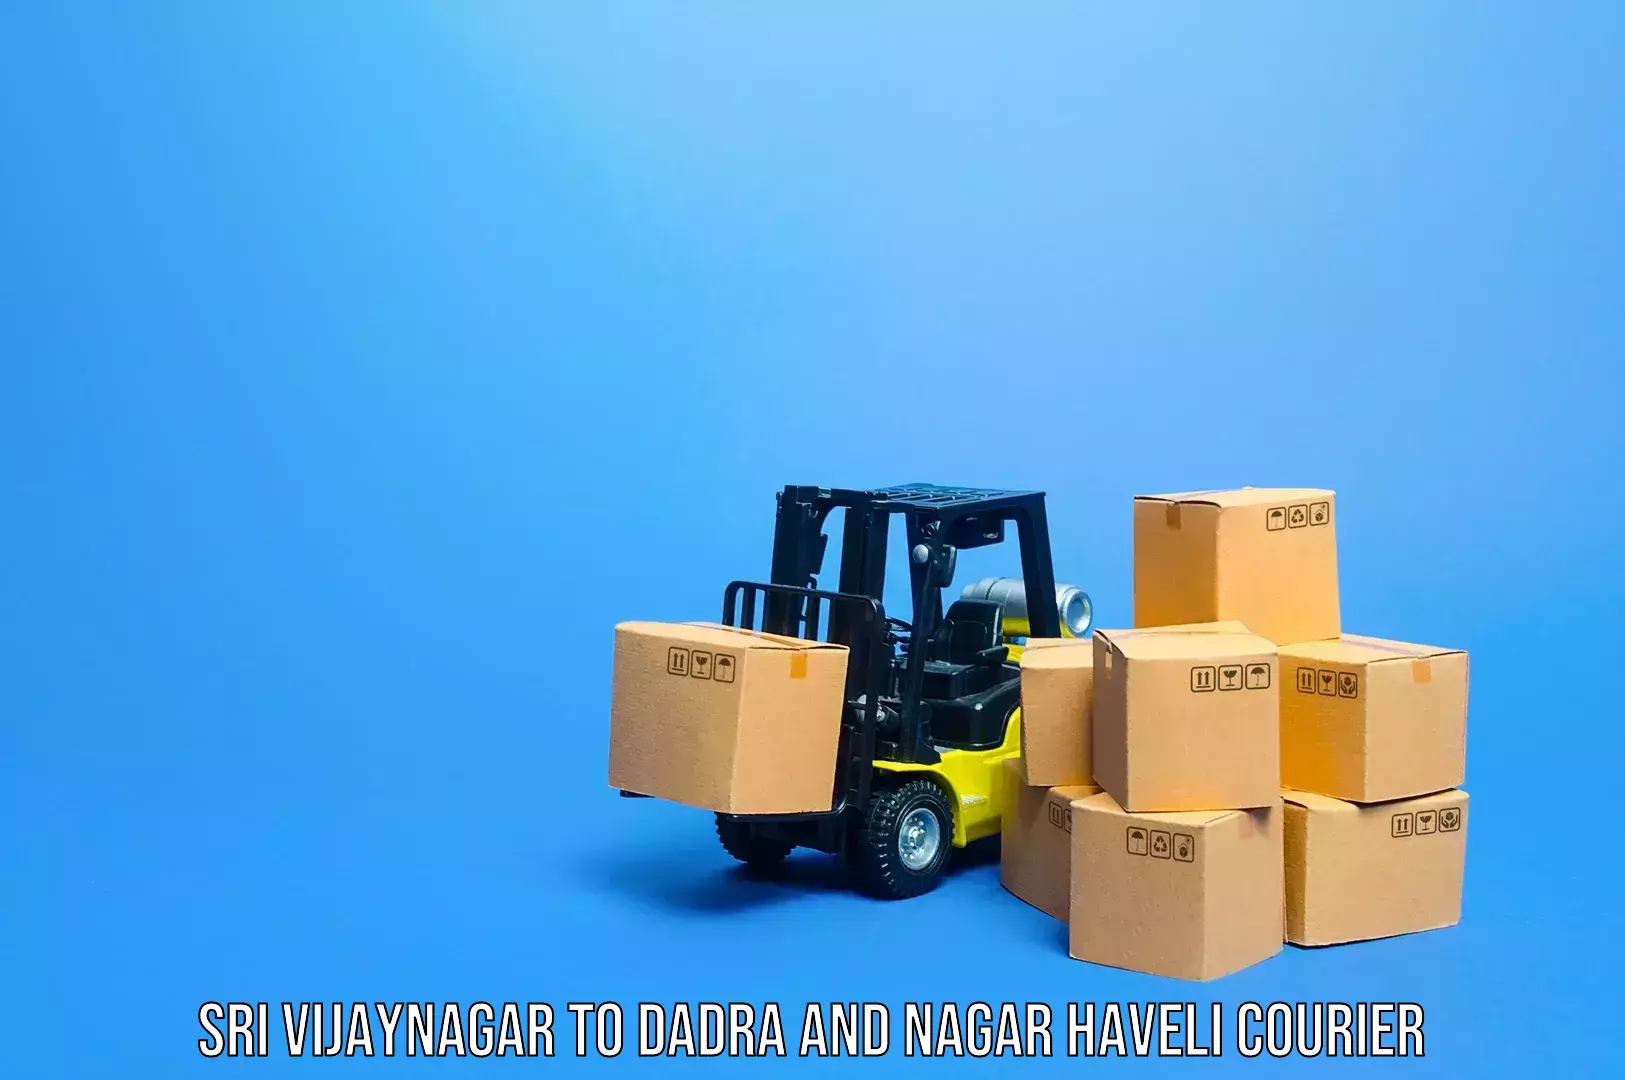 Luggage shipment logistics in Sri Vijaynagar to Dadra and Nagar Haveli